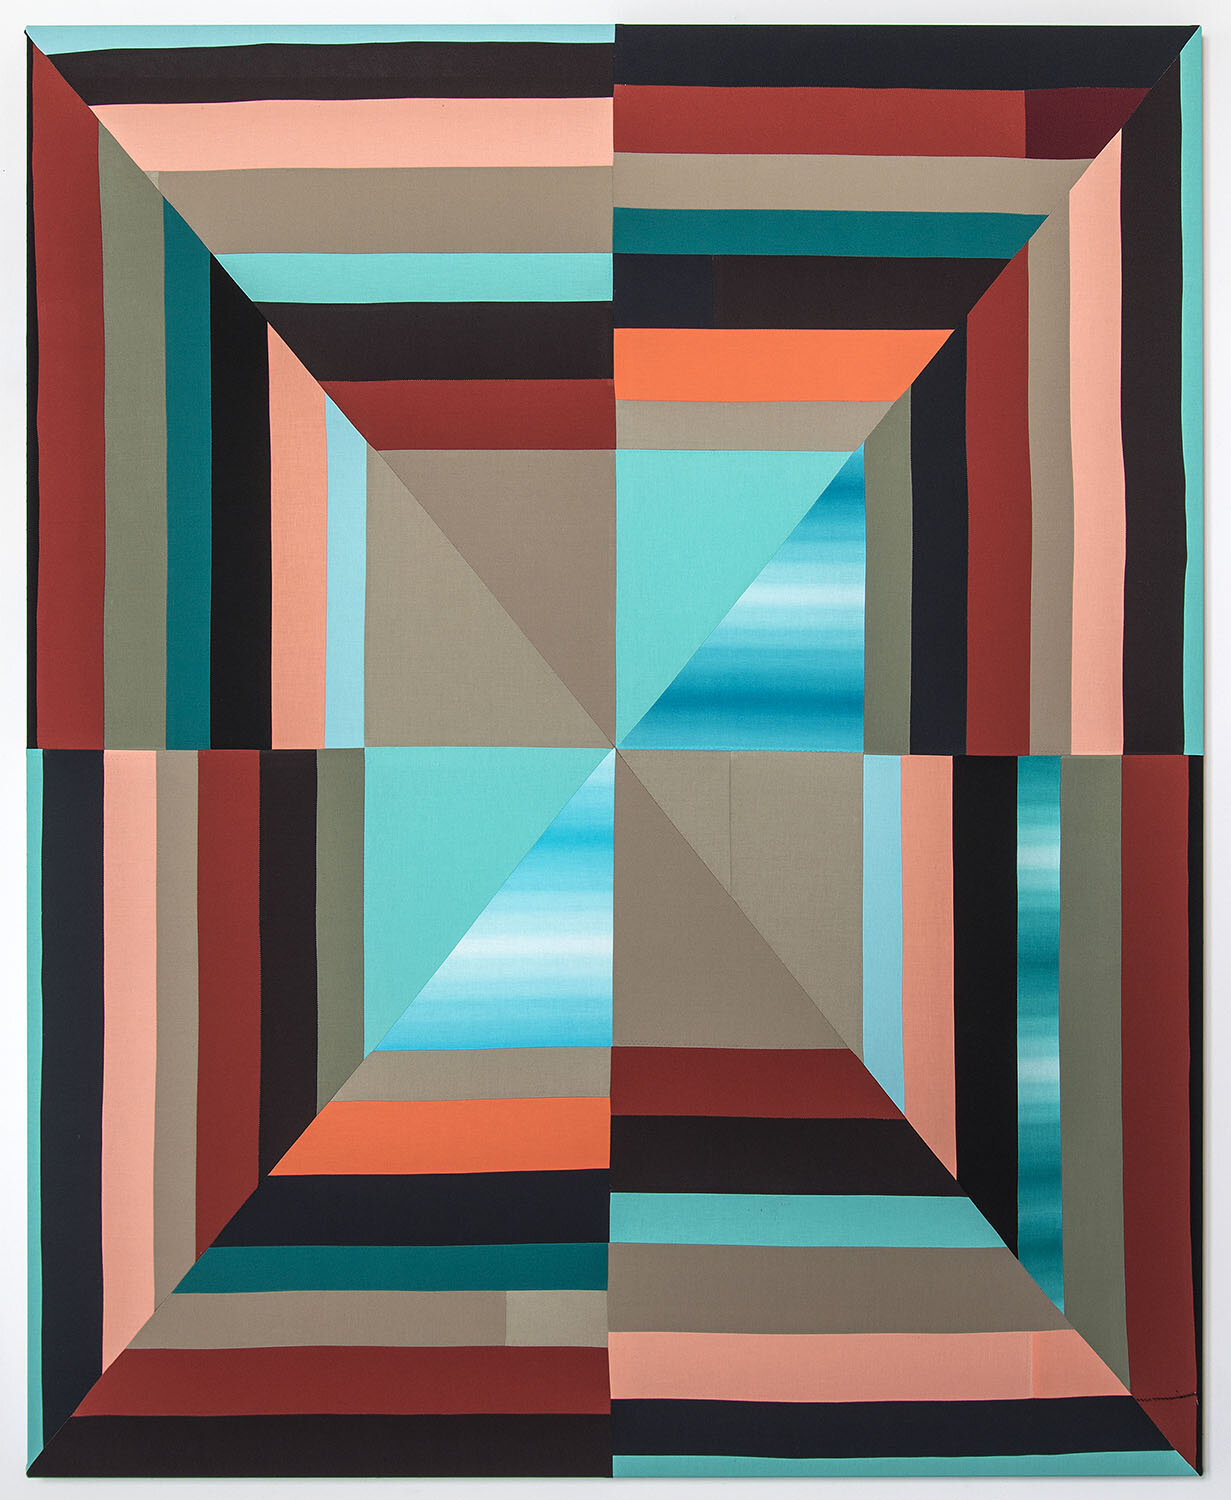    Phantom Futures,   2019 Sewn cotton and canvas 68 x 55 inches (172.7 x 139.7 cm) 